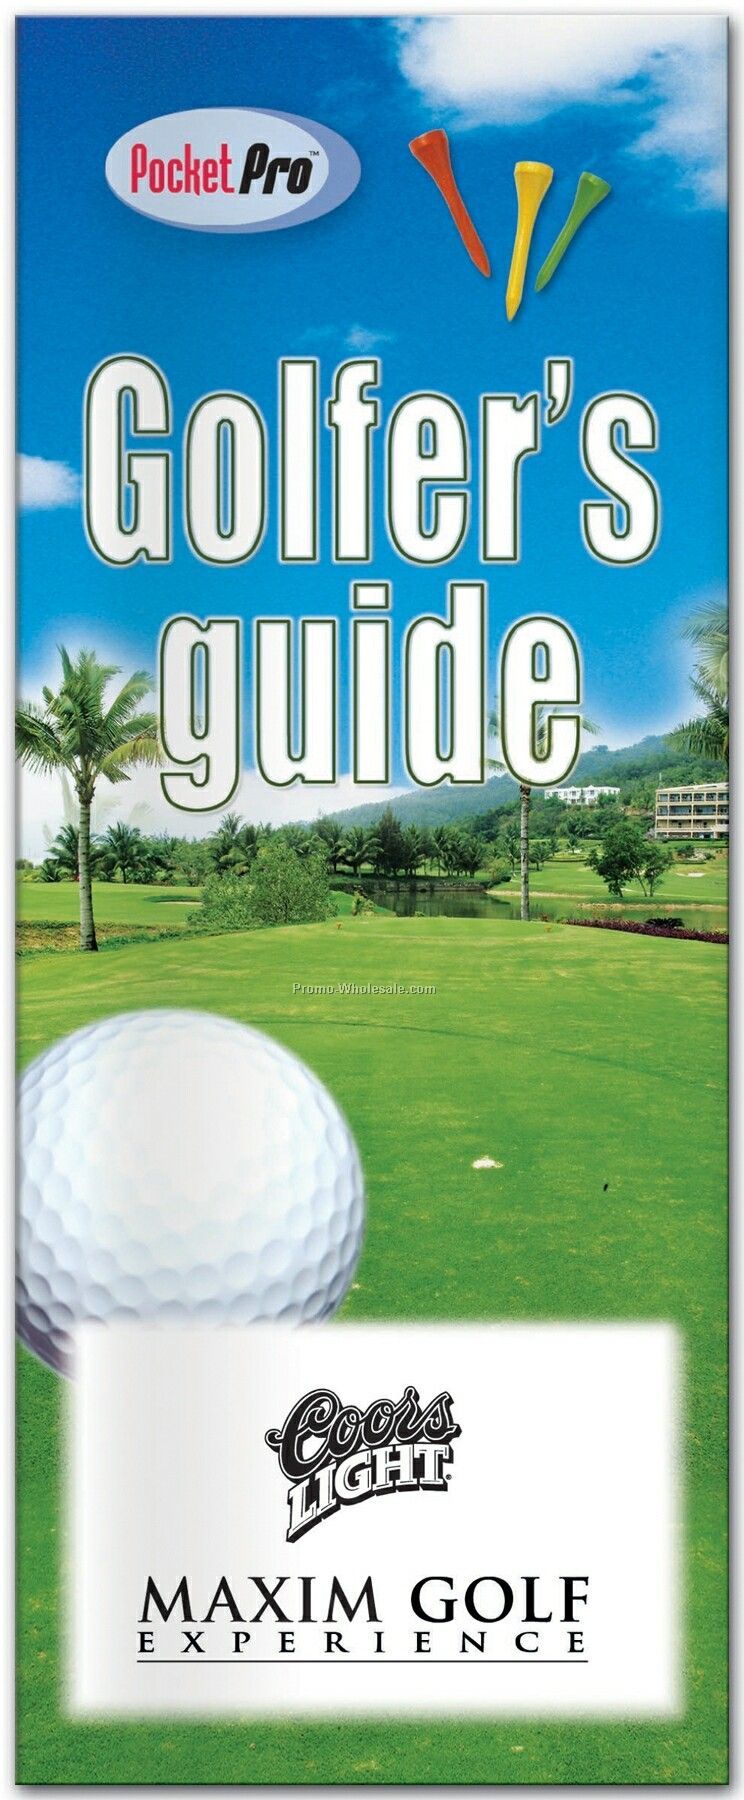 Pillowline Golfer's Guide Pocket Pro Brochure